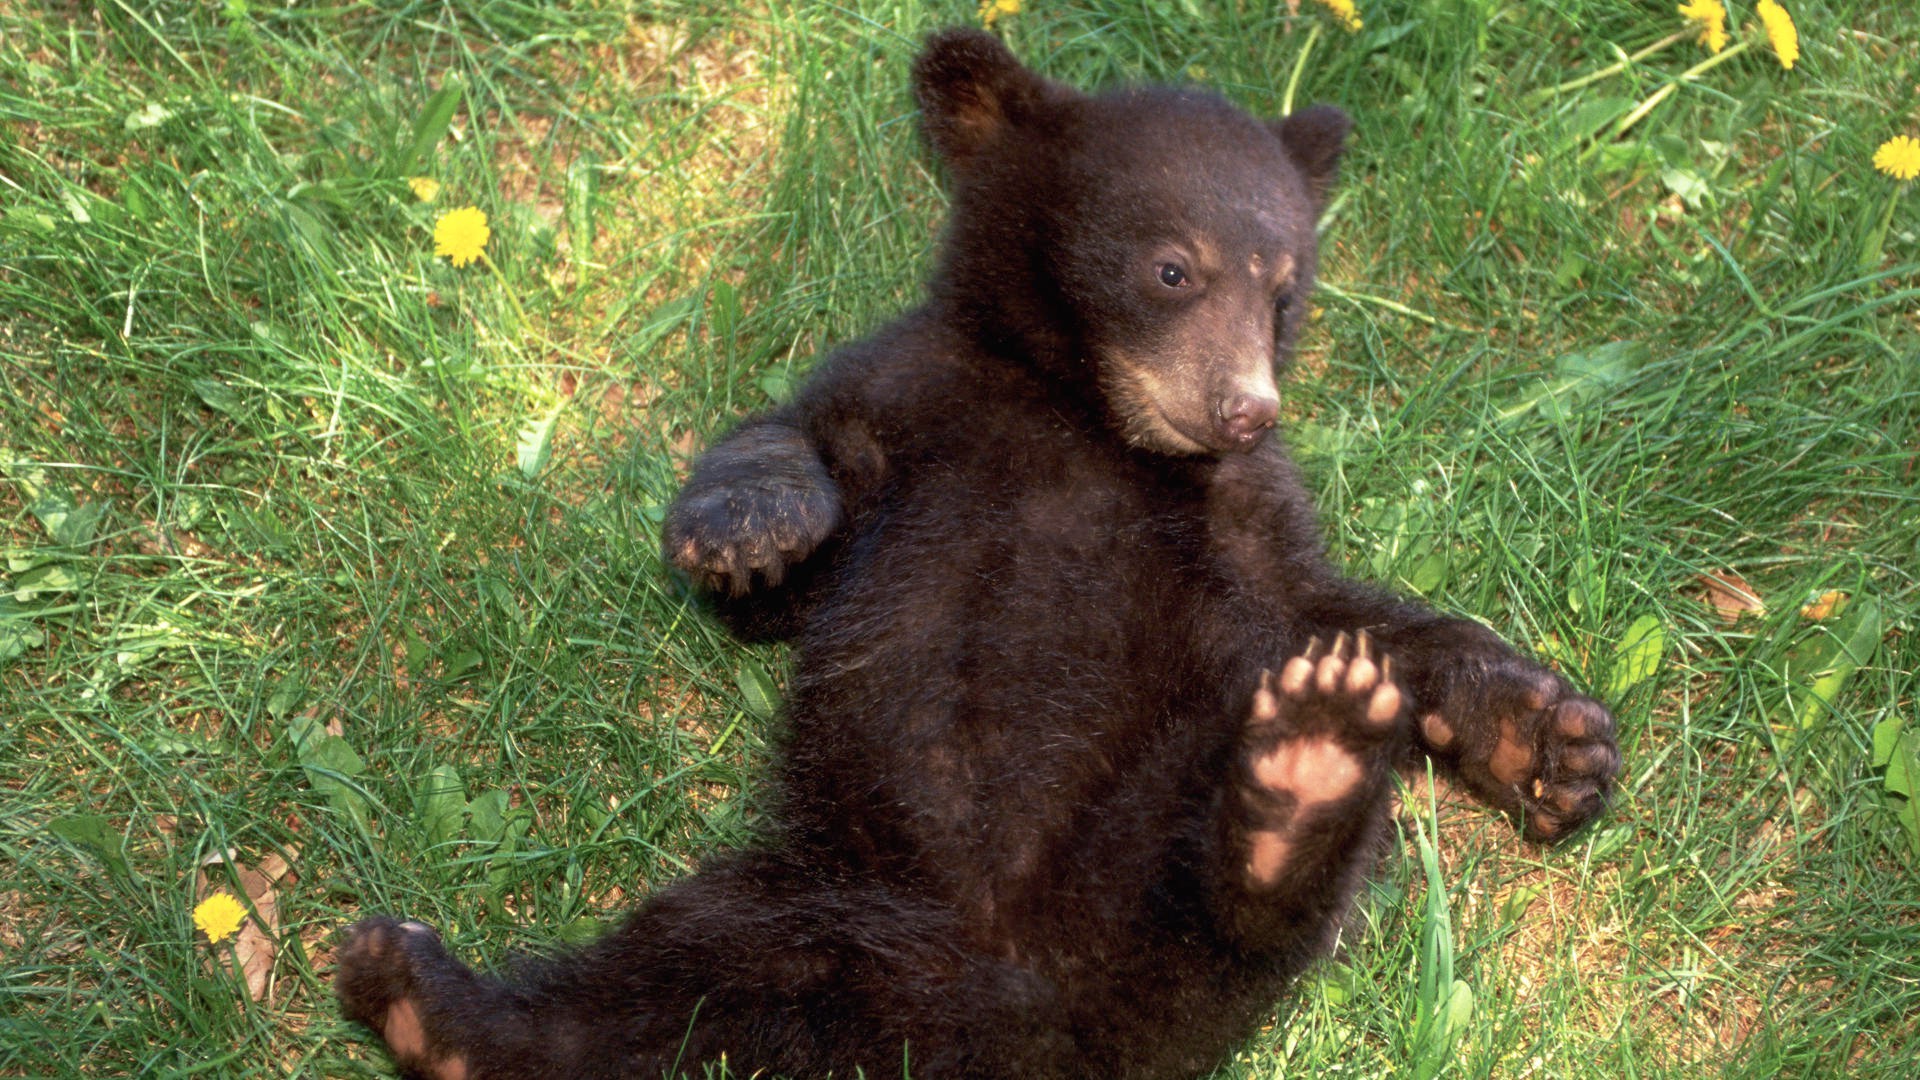 bears mammal grass wildlife outdoors cute nature animal fur zoo